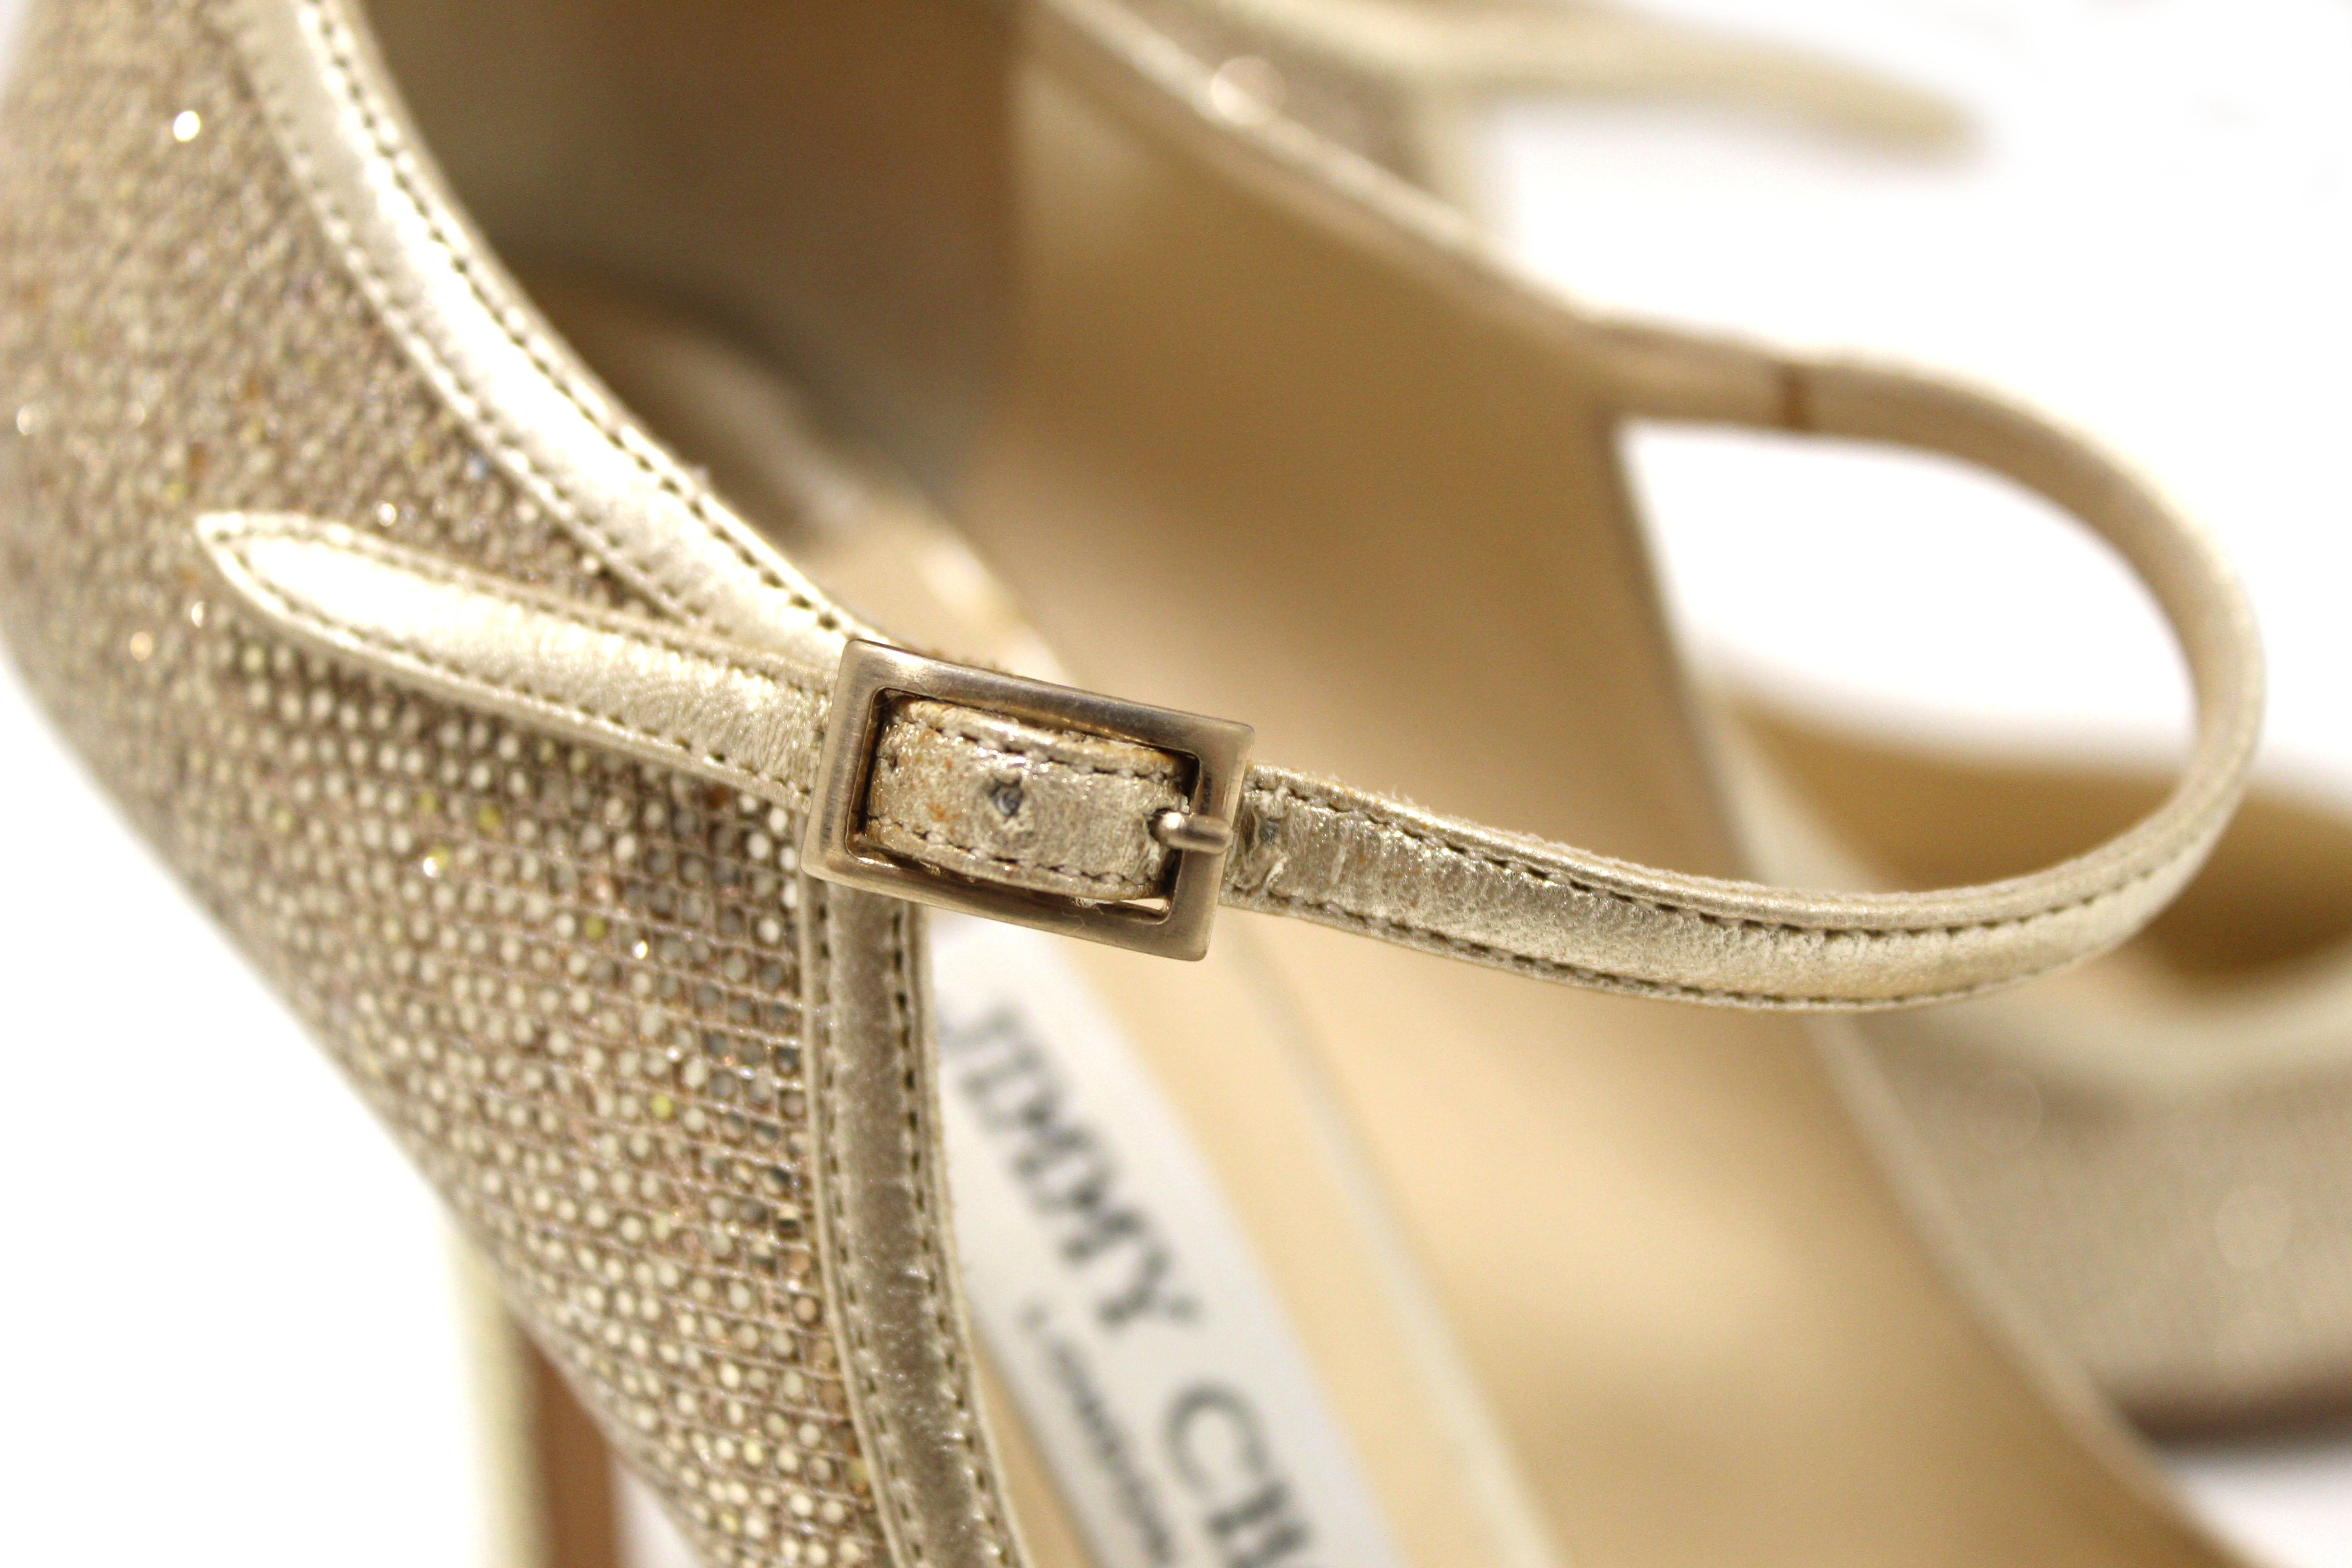 Authentic Jimmy Choo Champagne Gold Glitter Fabric Pump Heel Sandal Size 36.5